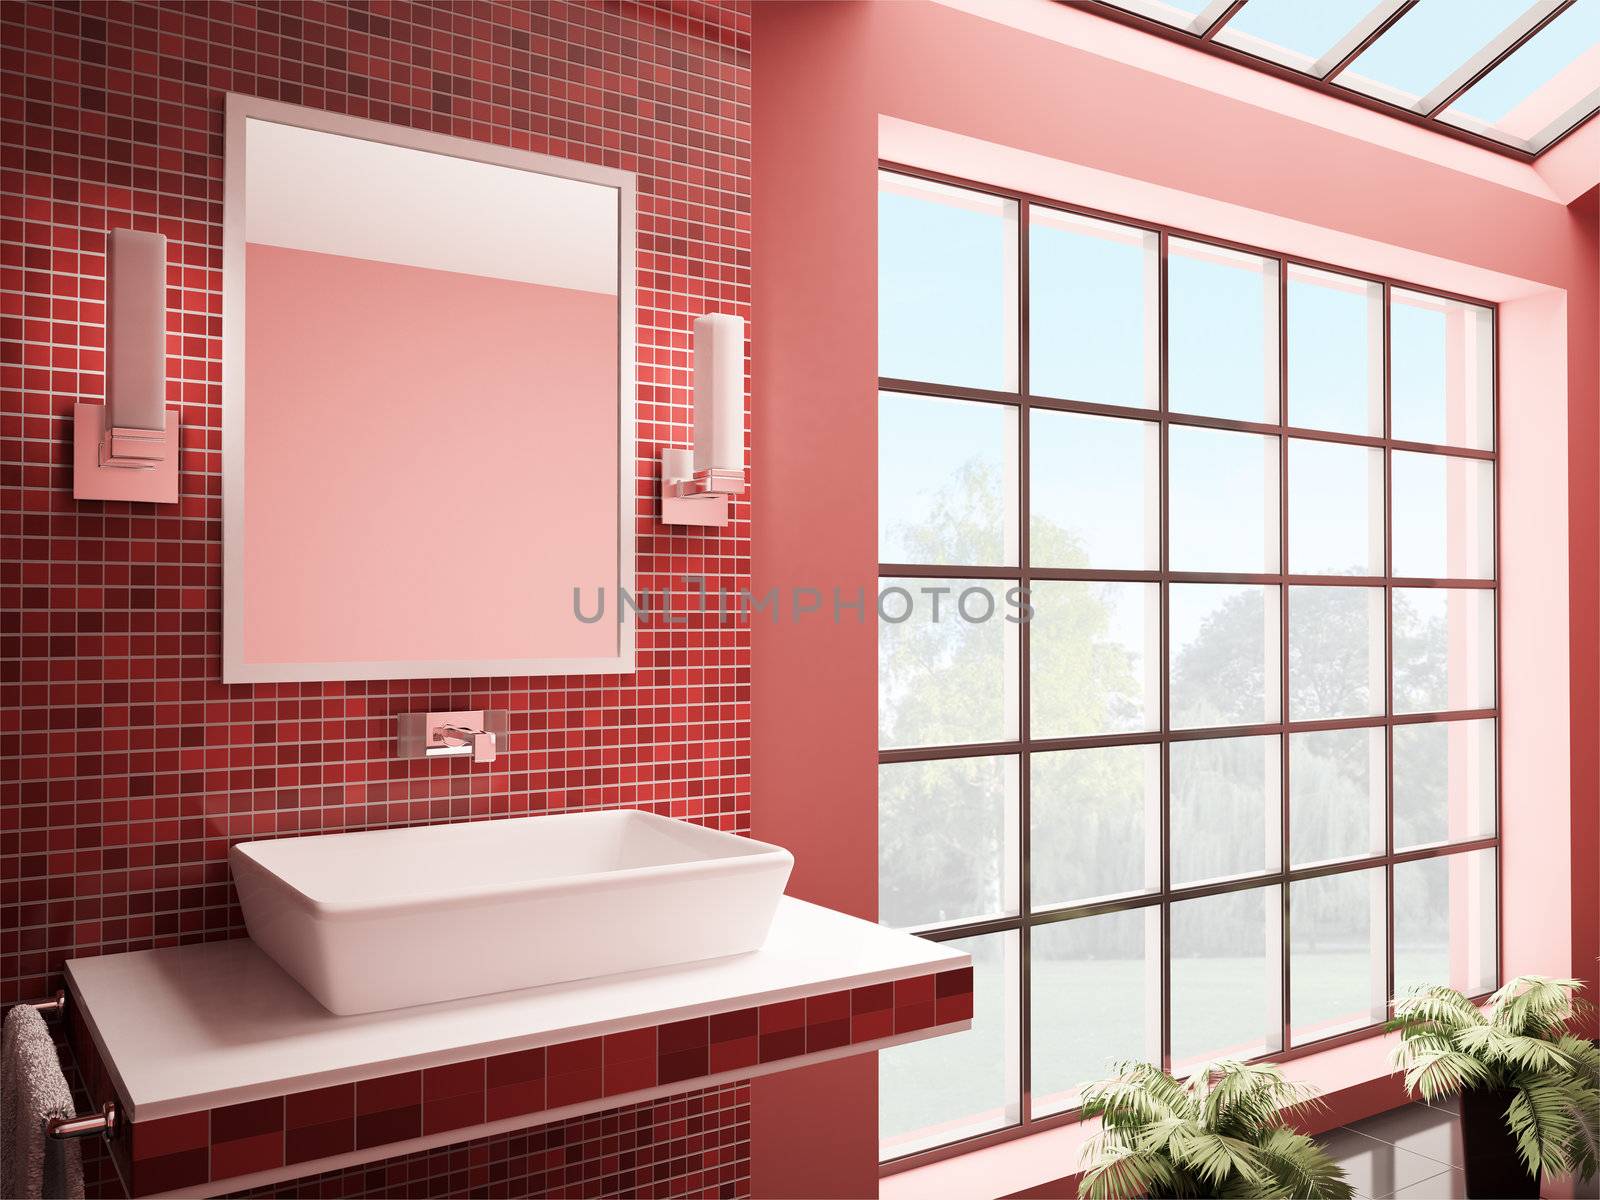 Red bathroom with big window interior 3d render